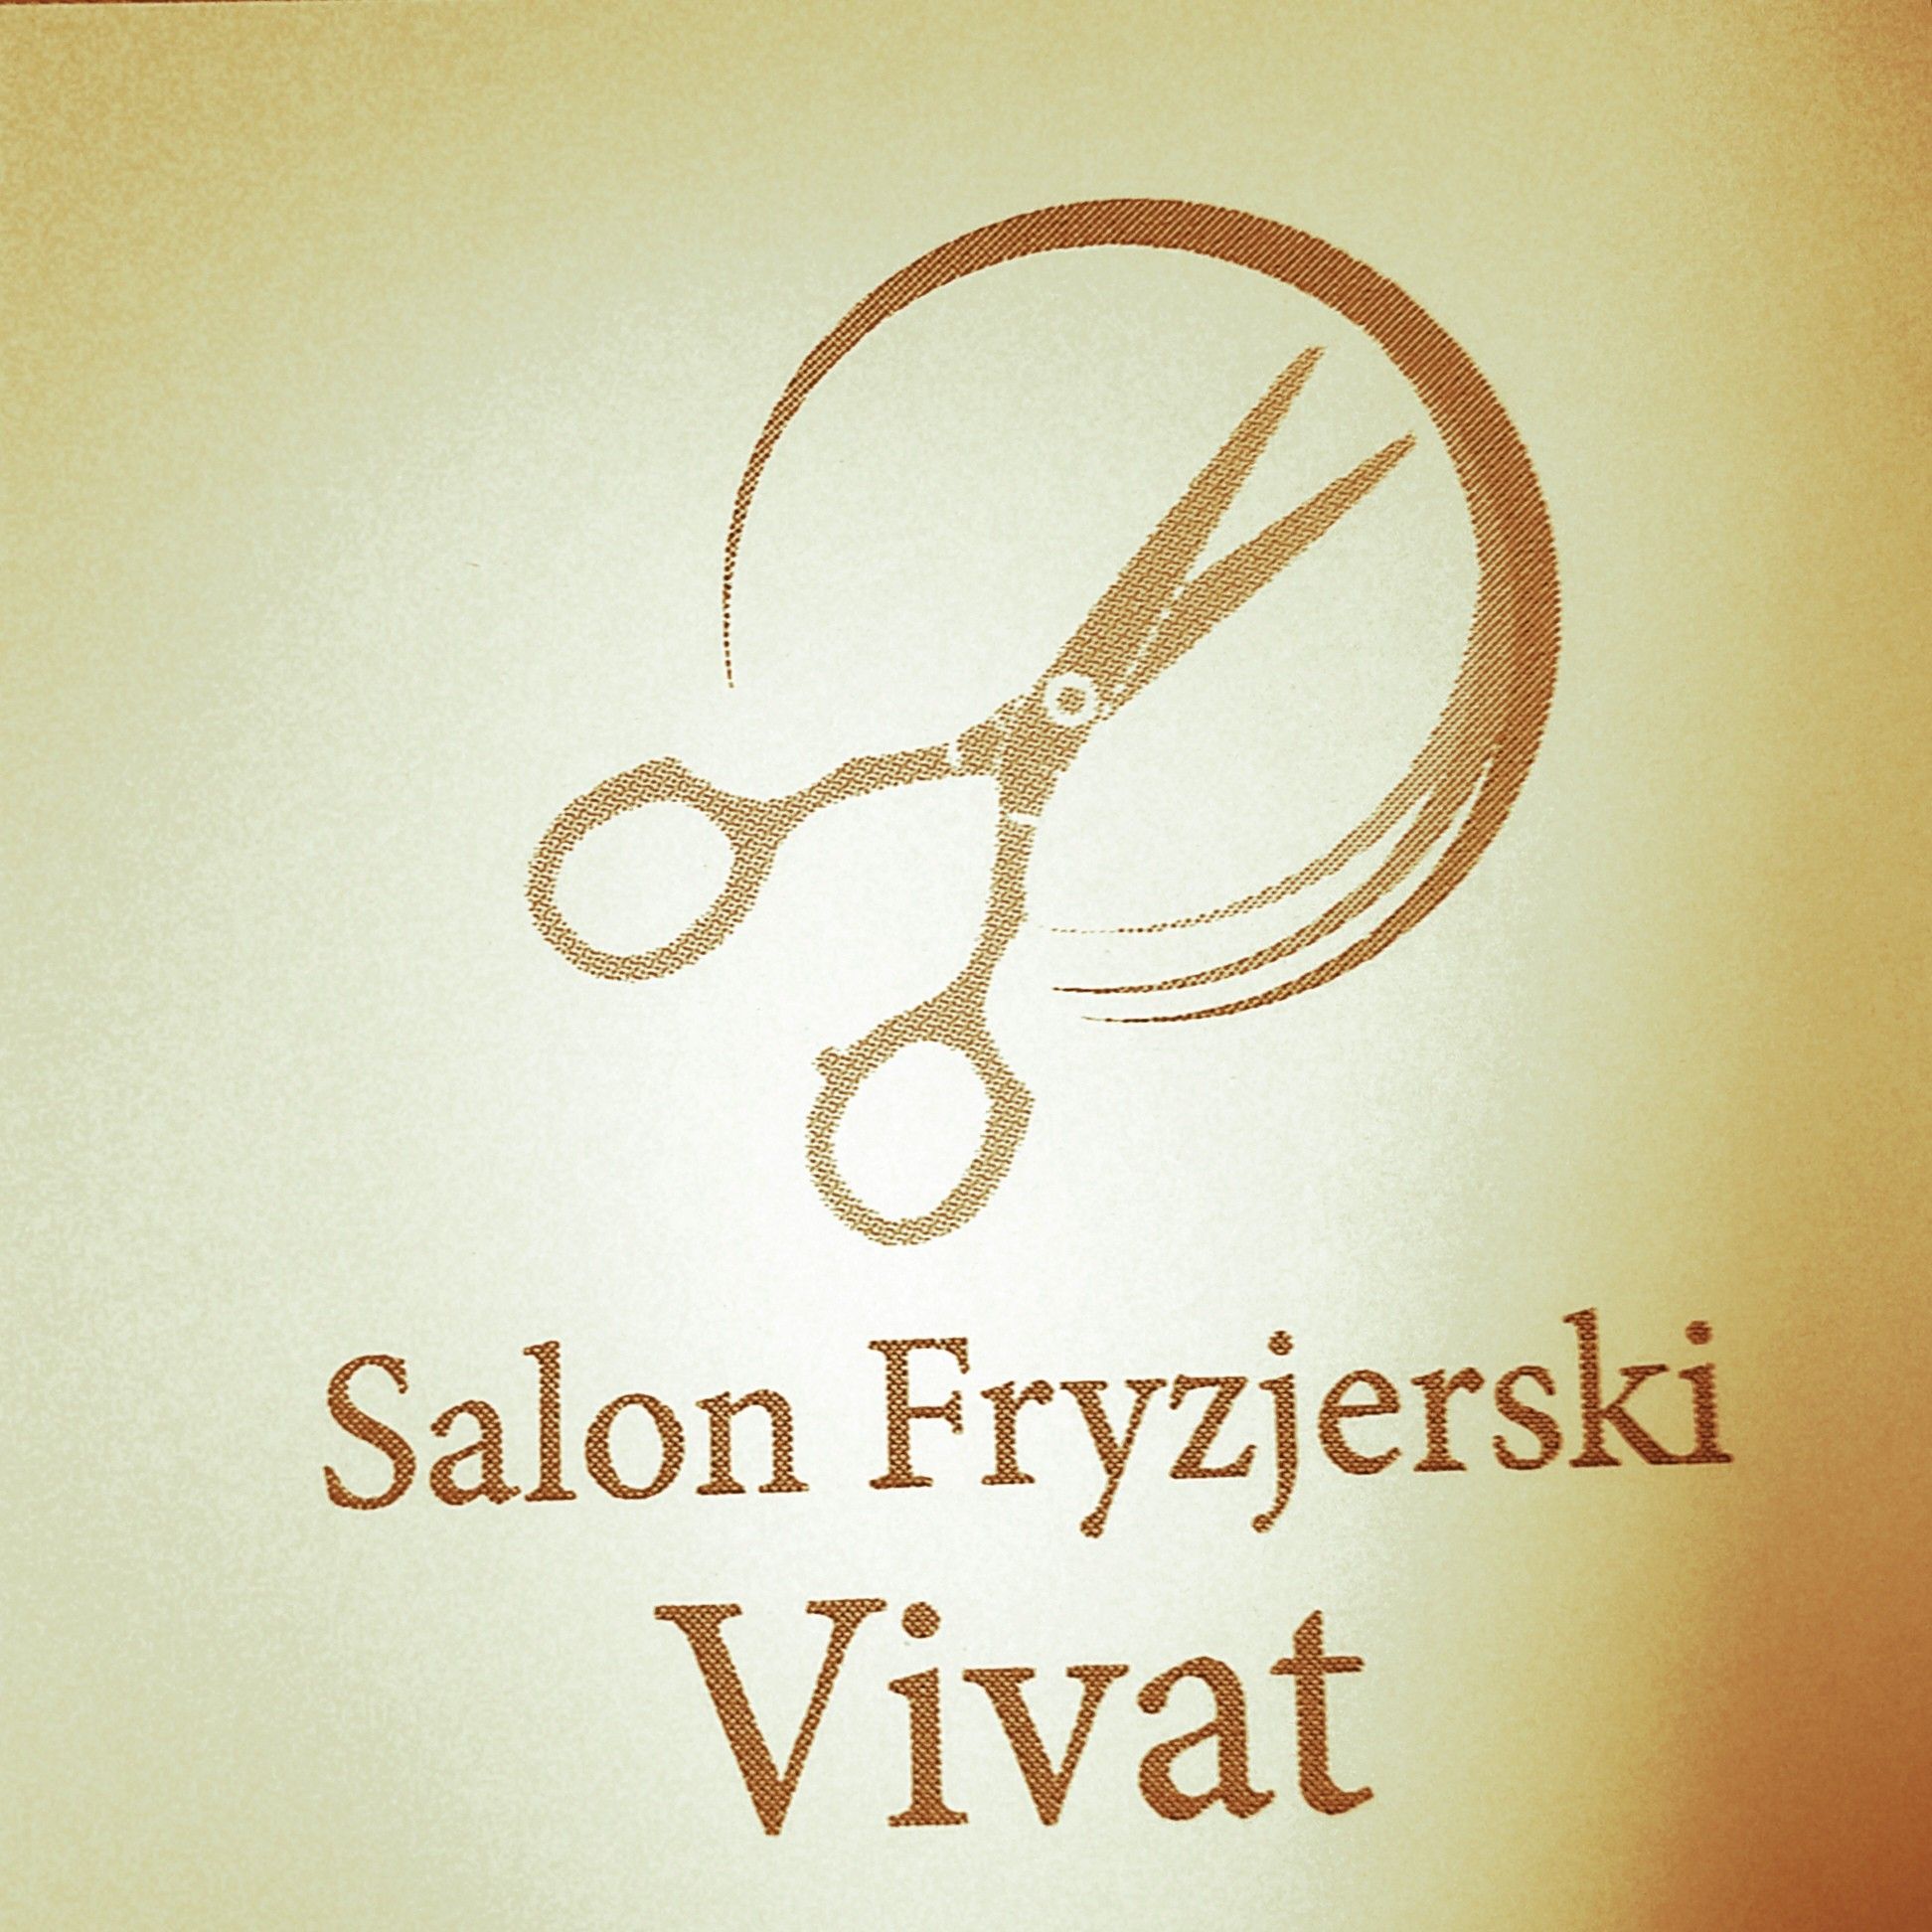 Salon Fryzjerski Vivat, Bielska 12, 43-430, Skoczów